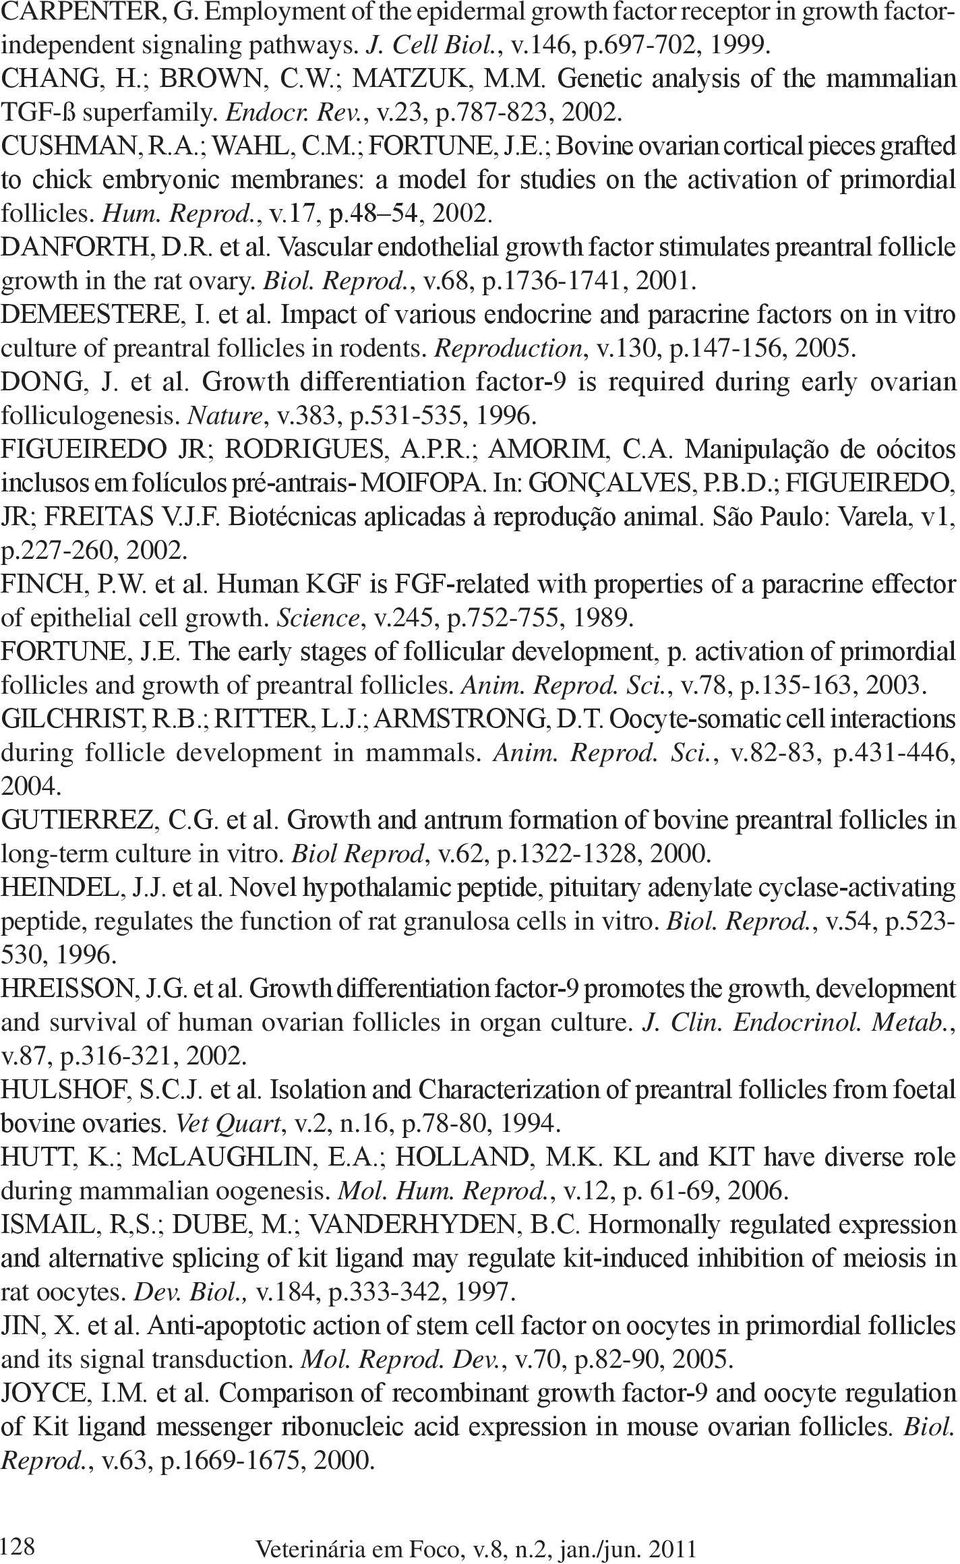 Hum. Reprod., v.17, p.48 54, 2002. DANFORTH, D.R. et al. Vascular endothelial growth factor stimulates preantral follicle growth in the rat ovary. Biol. Reprod., v.68, p.1736-1741, 2001.